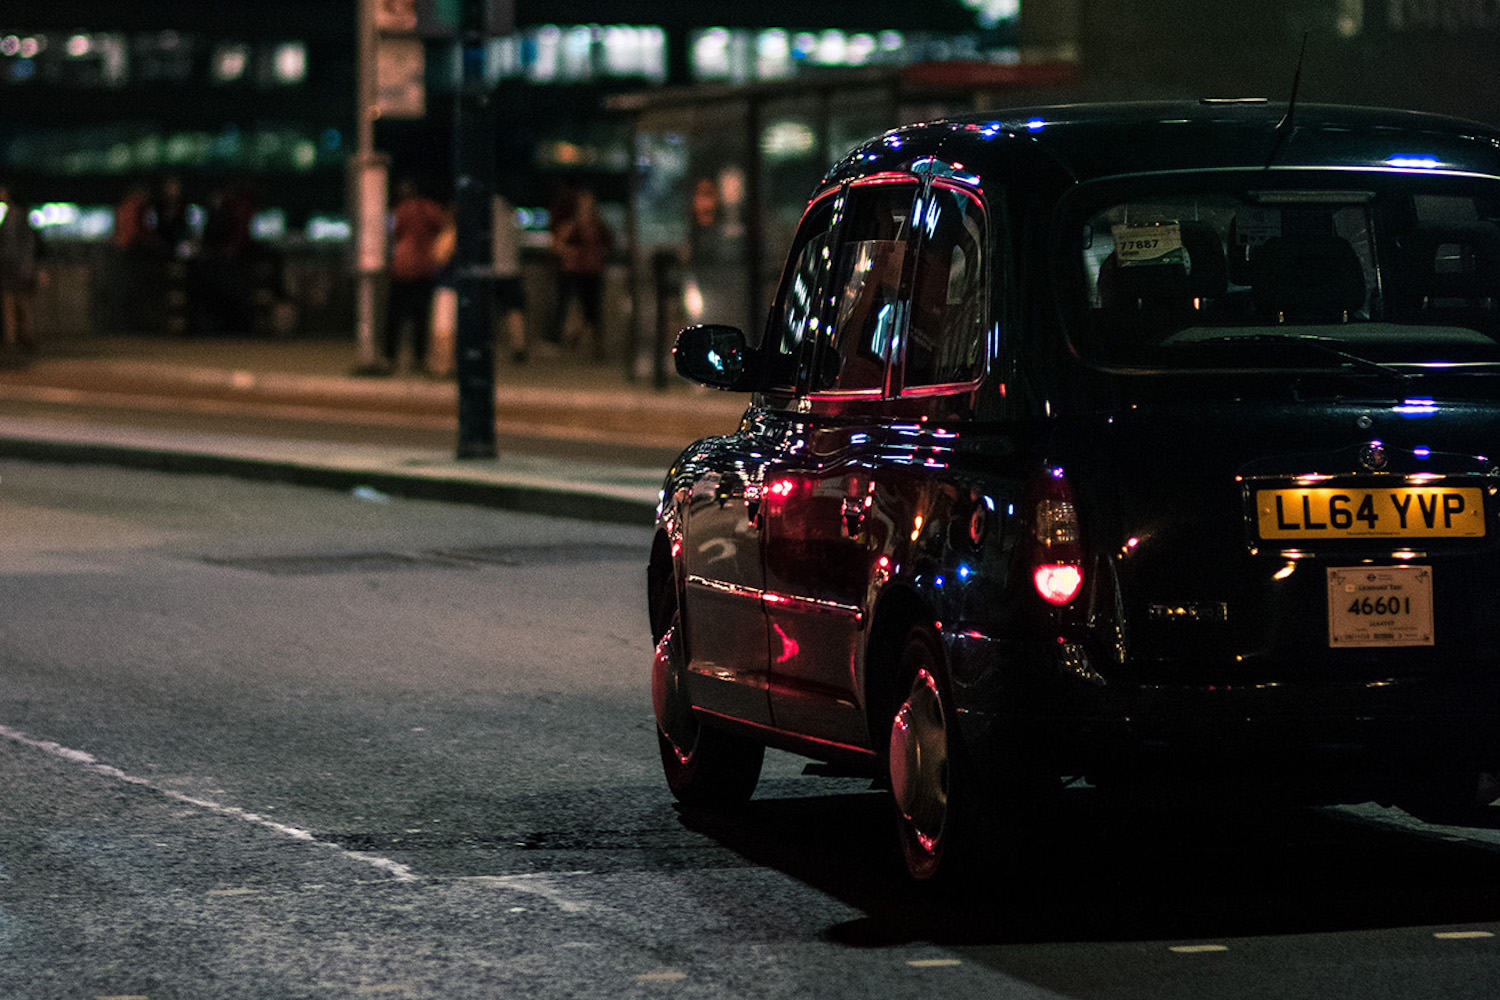 A taxi at night